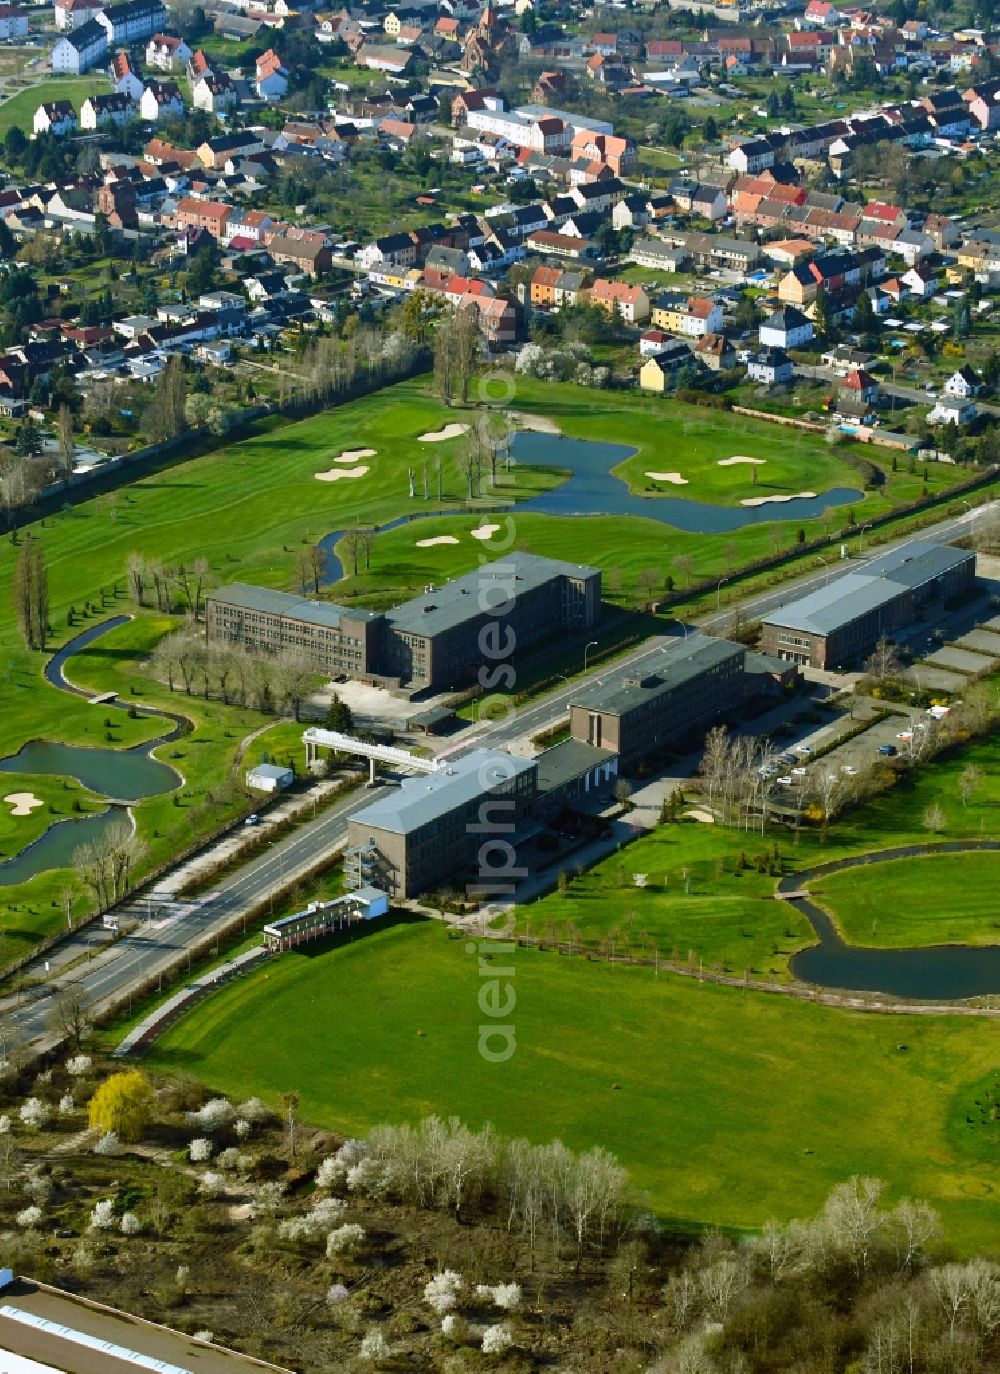 Aerial image Dessau - Grounds of the Golf course at Golf-Park Dessau e.V. in Dessau in the state Saxony-Anhalt, Germany